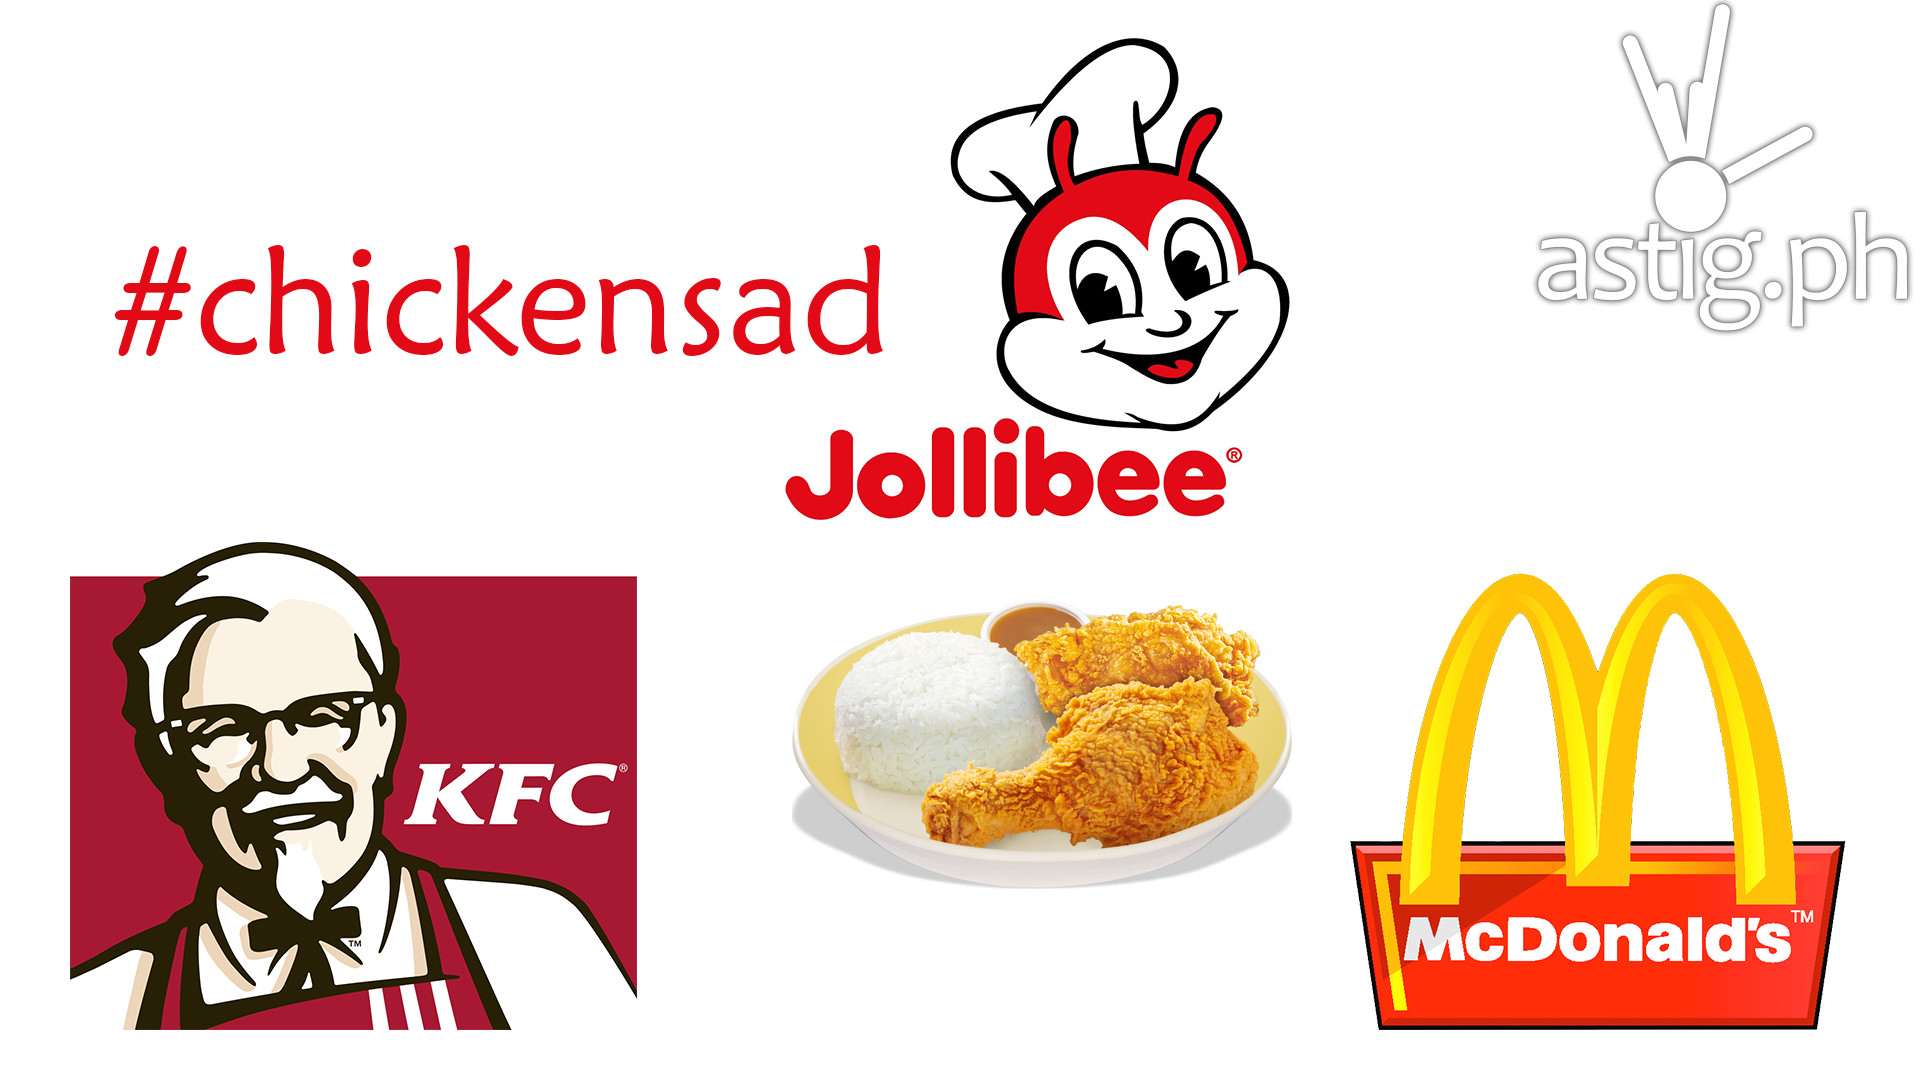 Chickensad? Jollibee vs KFC vs McDonald's